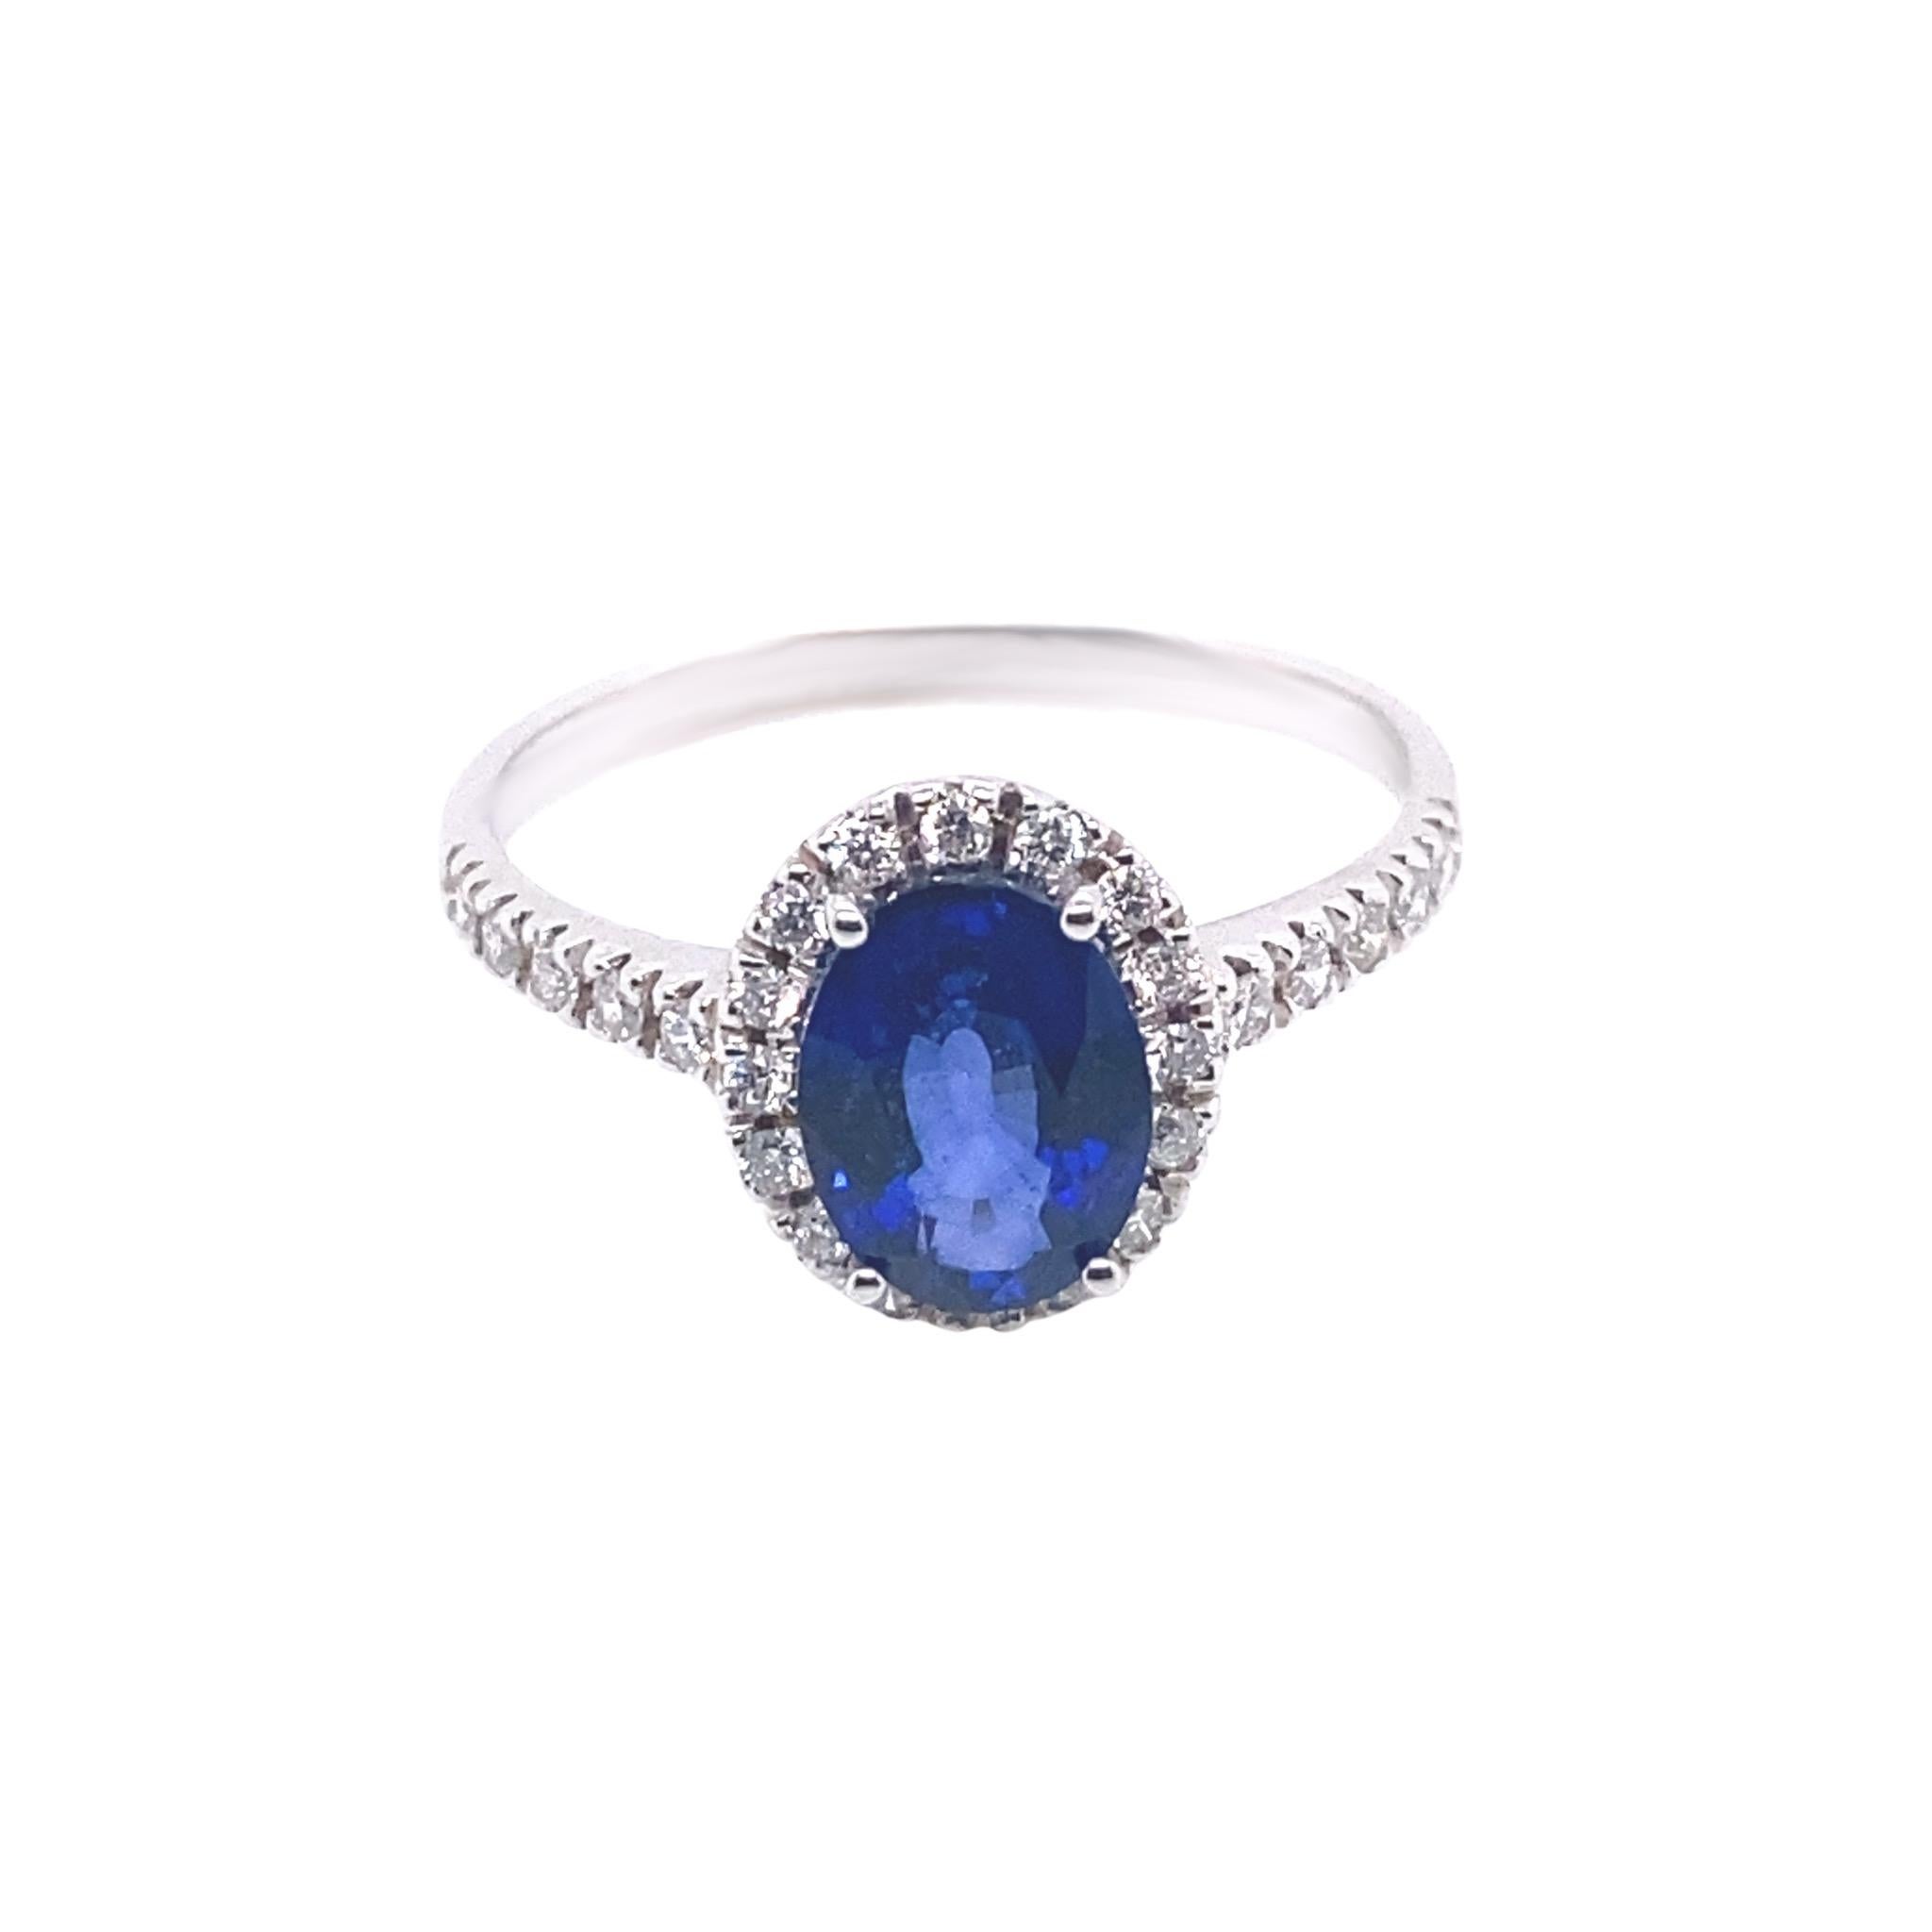 Contemporary 21st Century 18-Karat White Gold 1.51-Carat Blue Sapphire Diamond Cocktail Ring For Sale